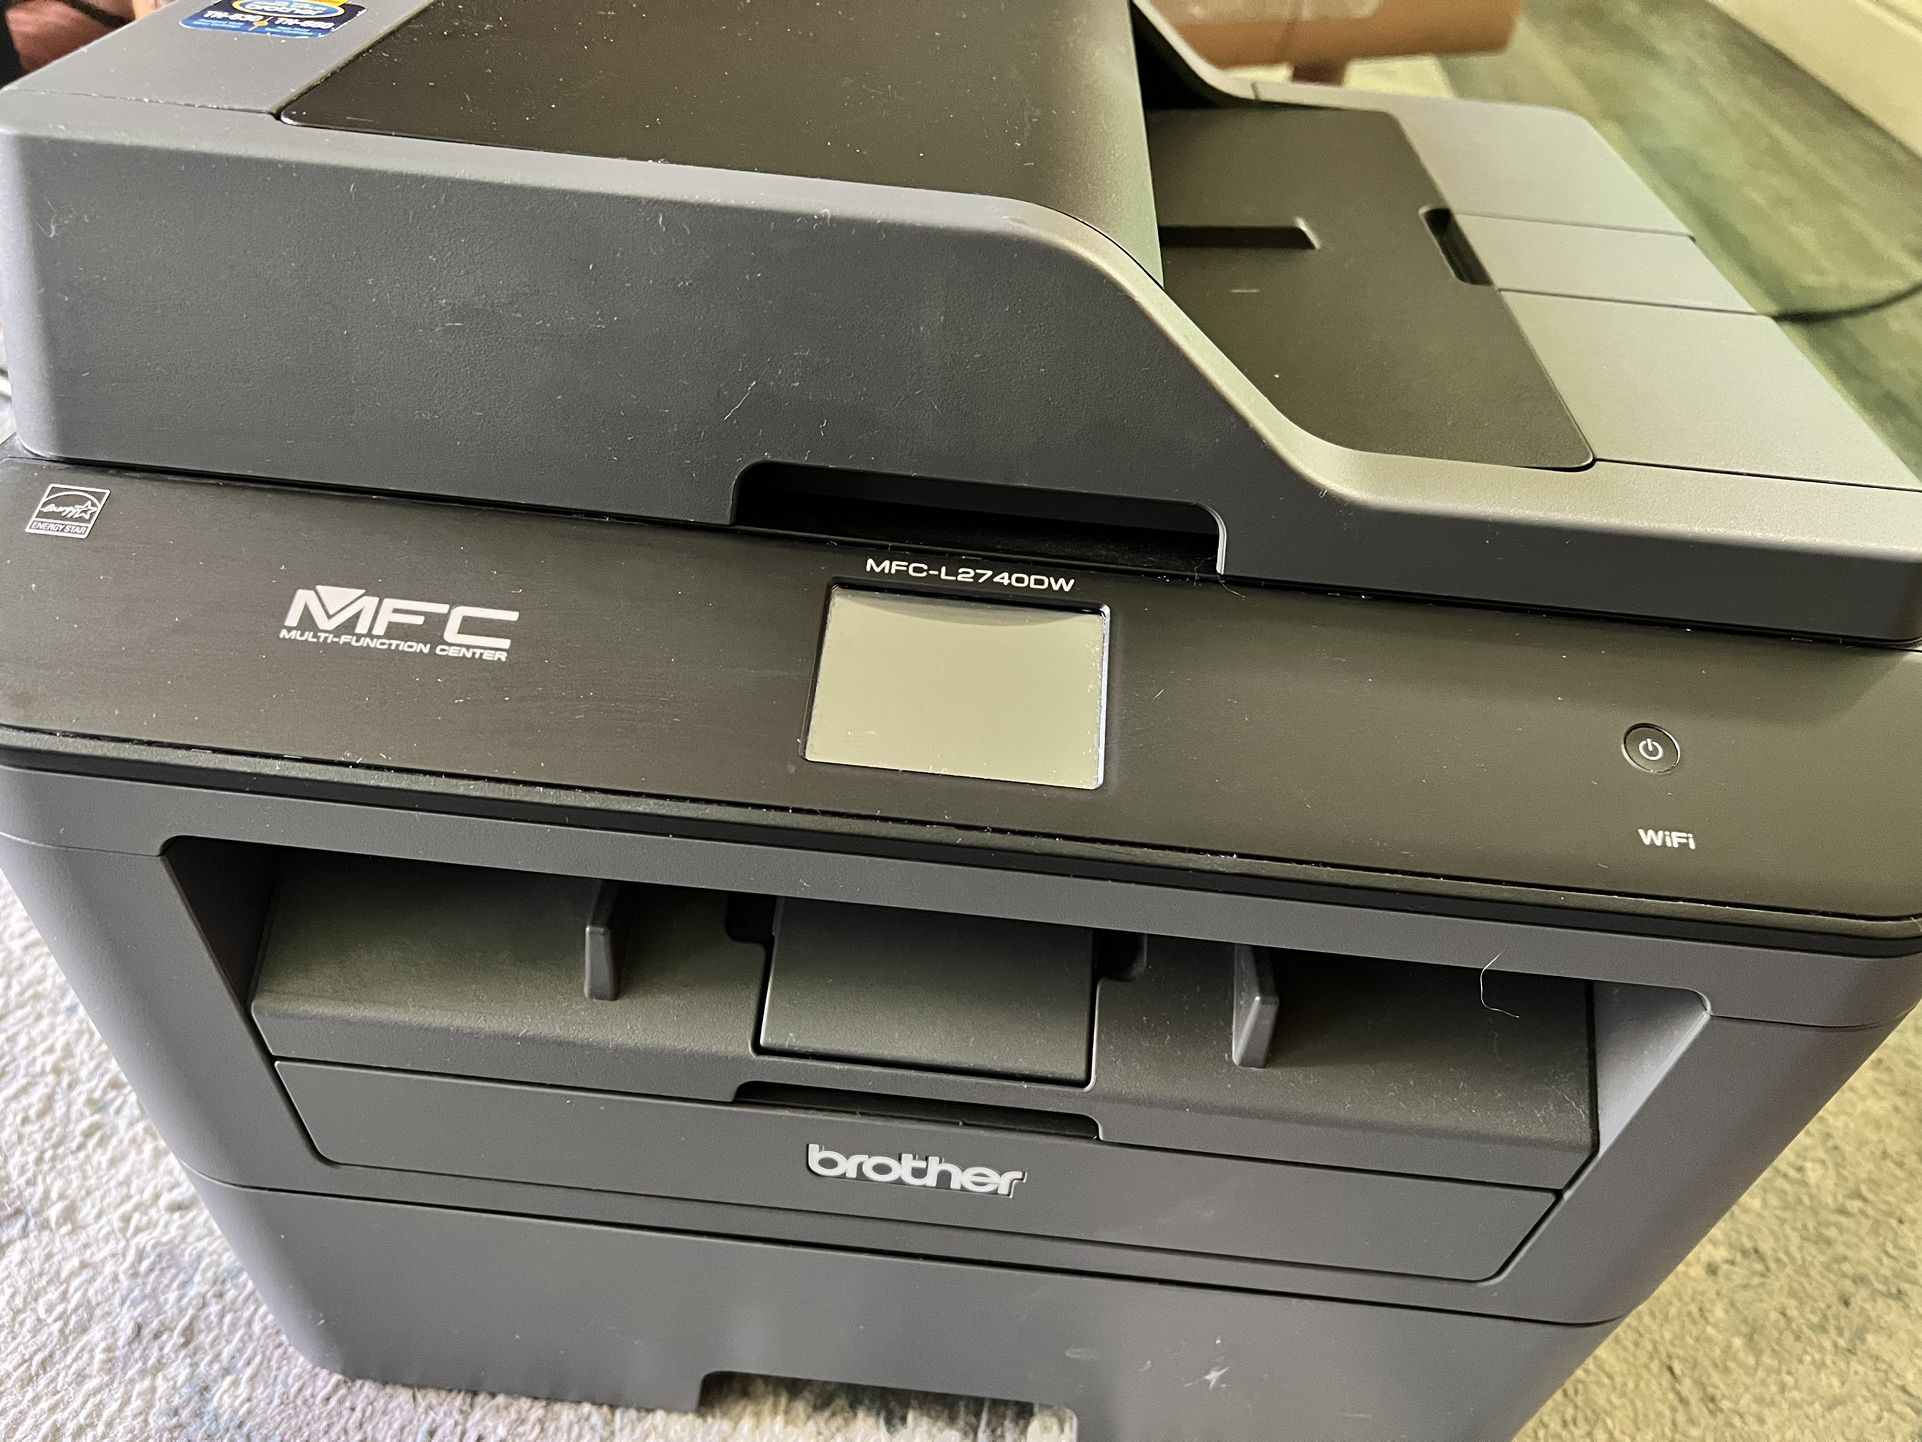 Brother MFC-L2740DW Printer